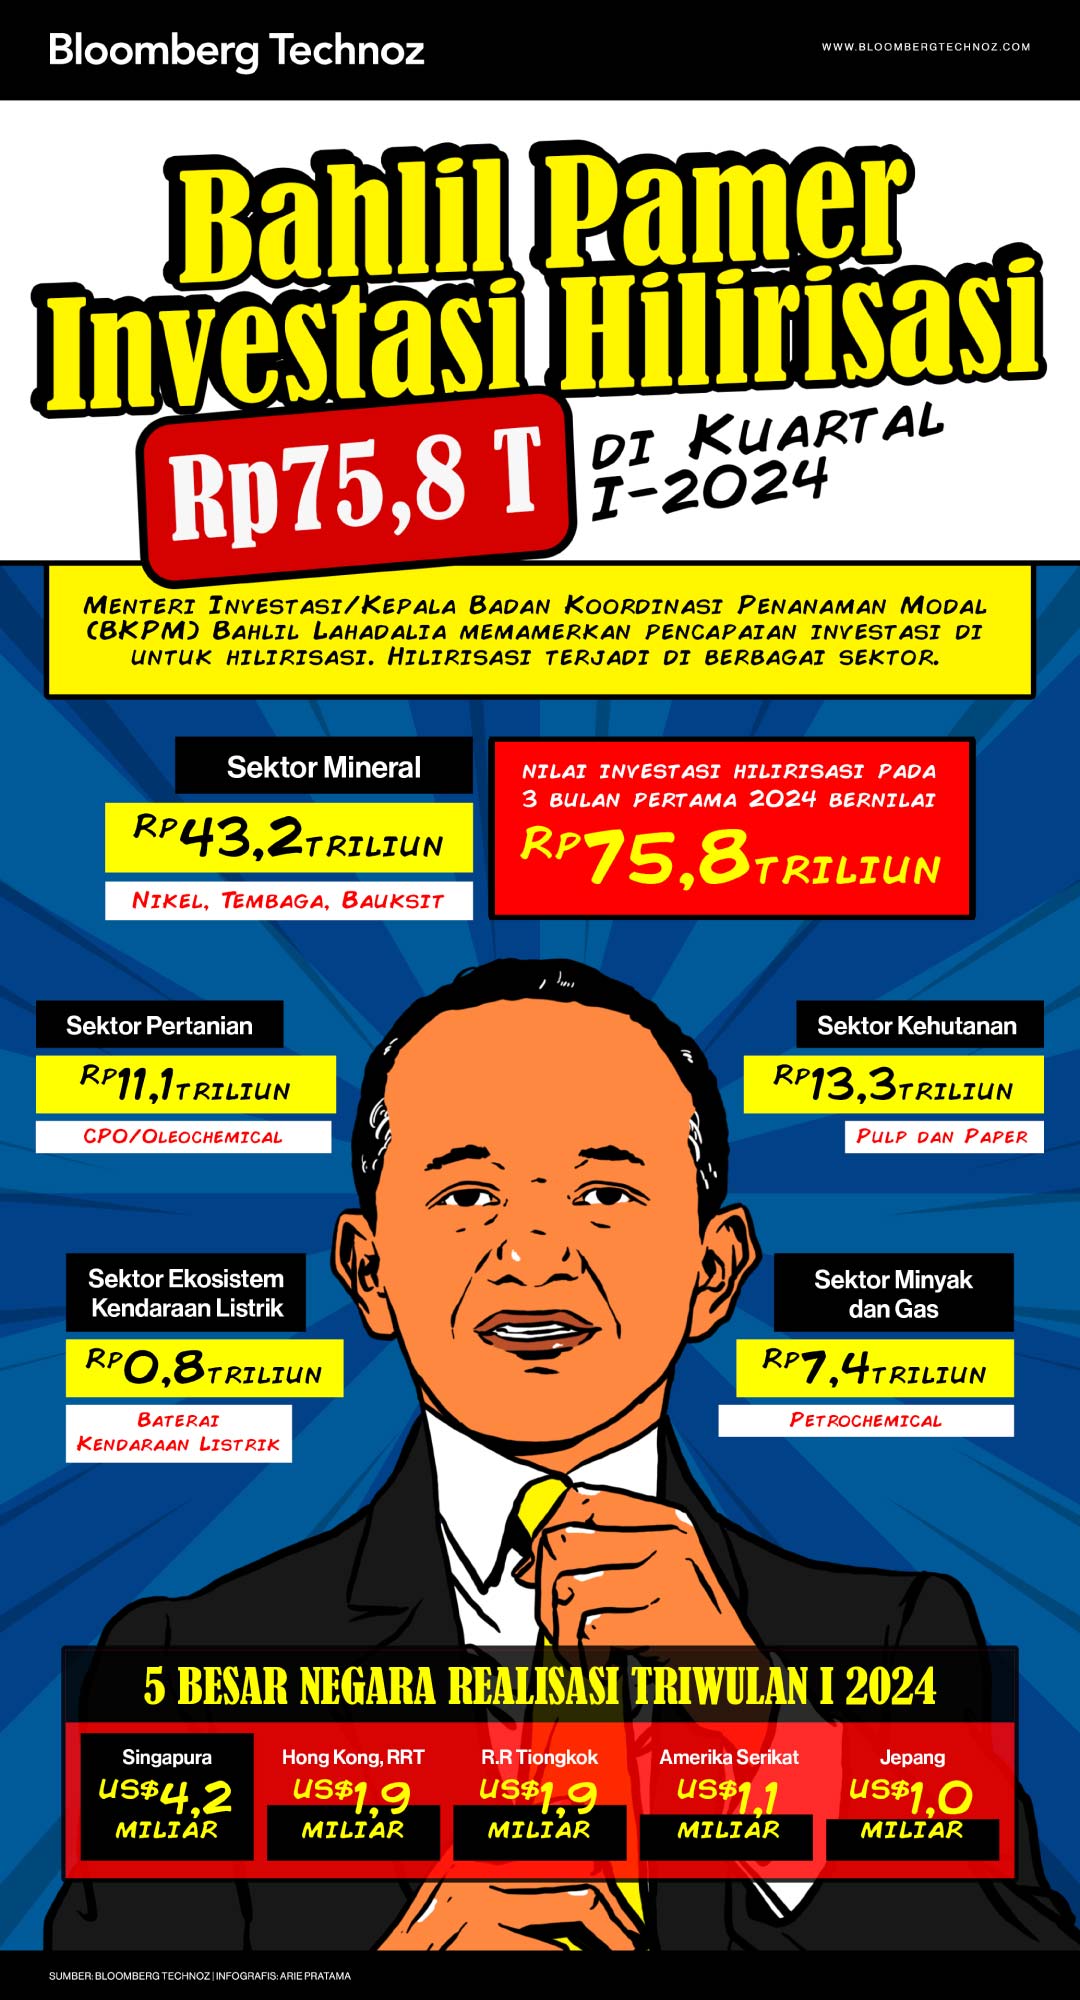 Bahlil Pamer Investasi Hilirisasi Rp75,8 T di Kuartal I-2024 (Bloomberg Technoz/Arie Pratama)